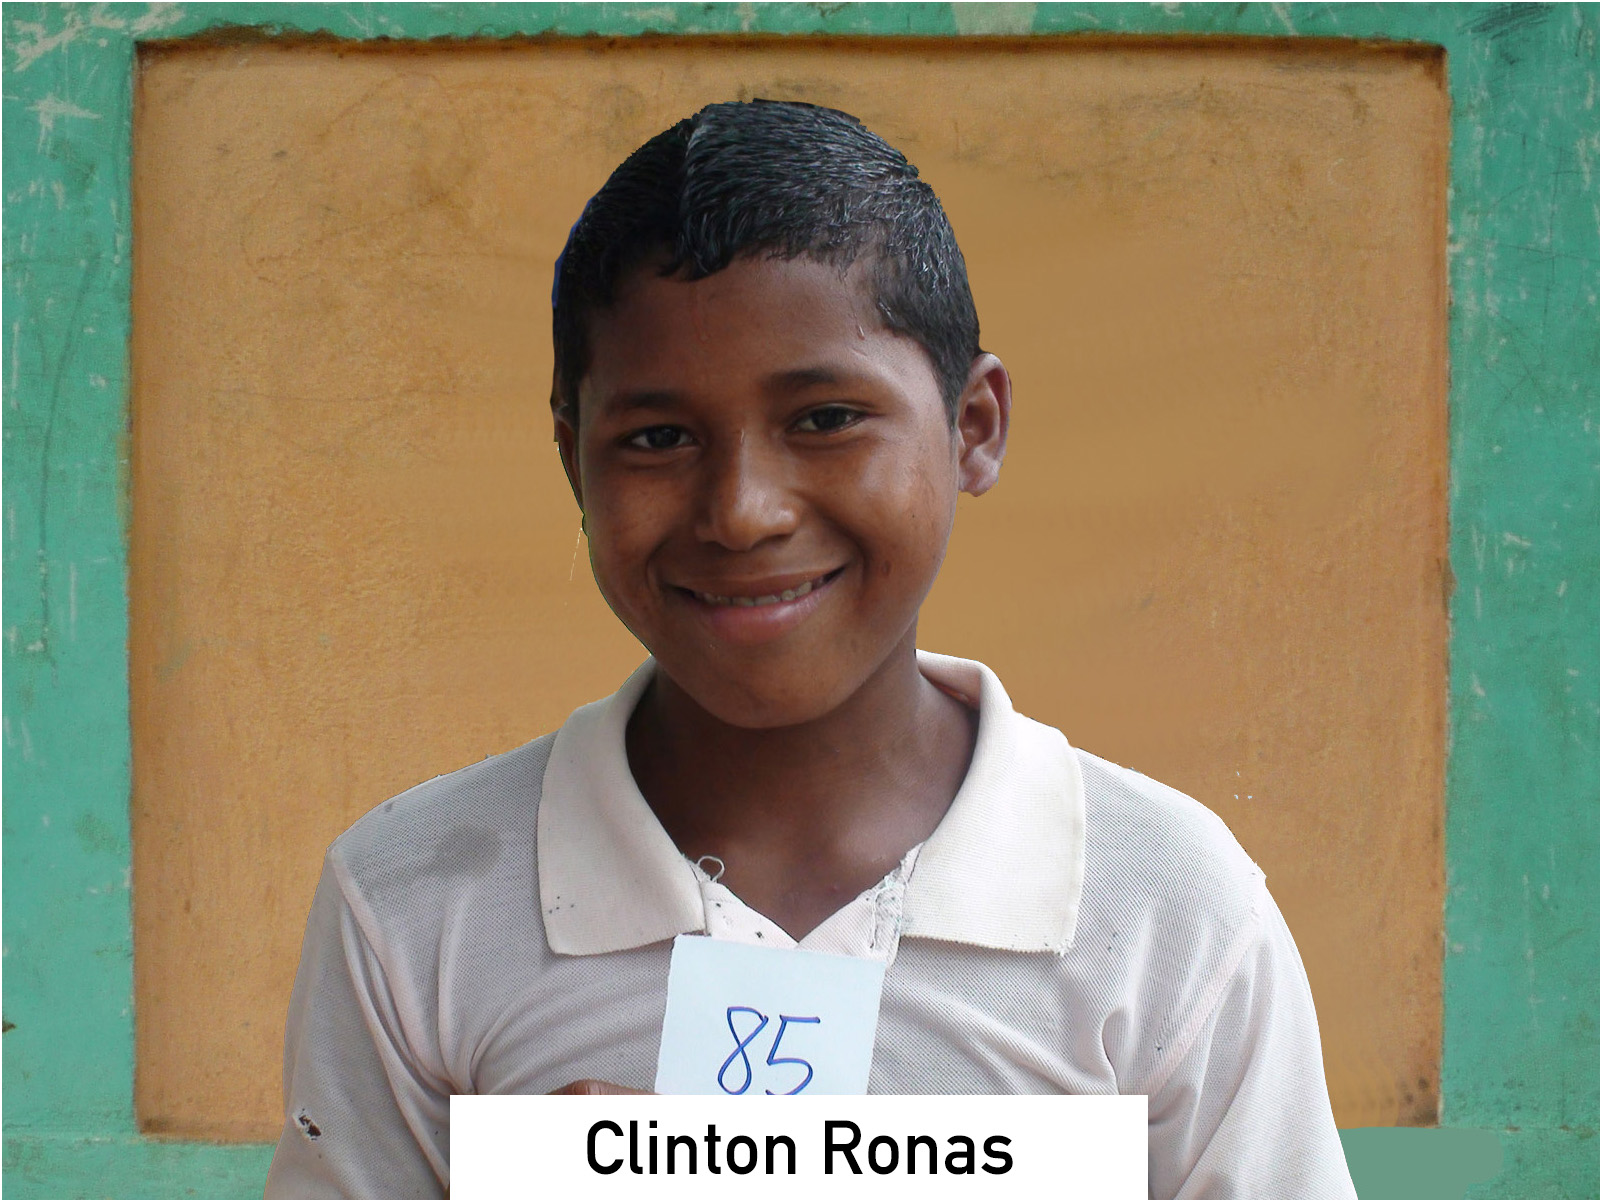 085 - Clinton Ronas.jpg